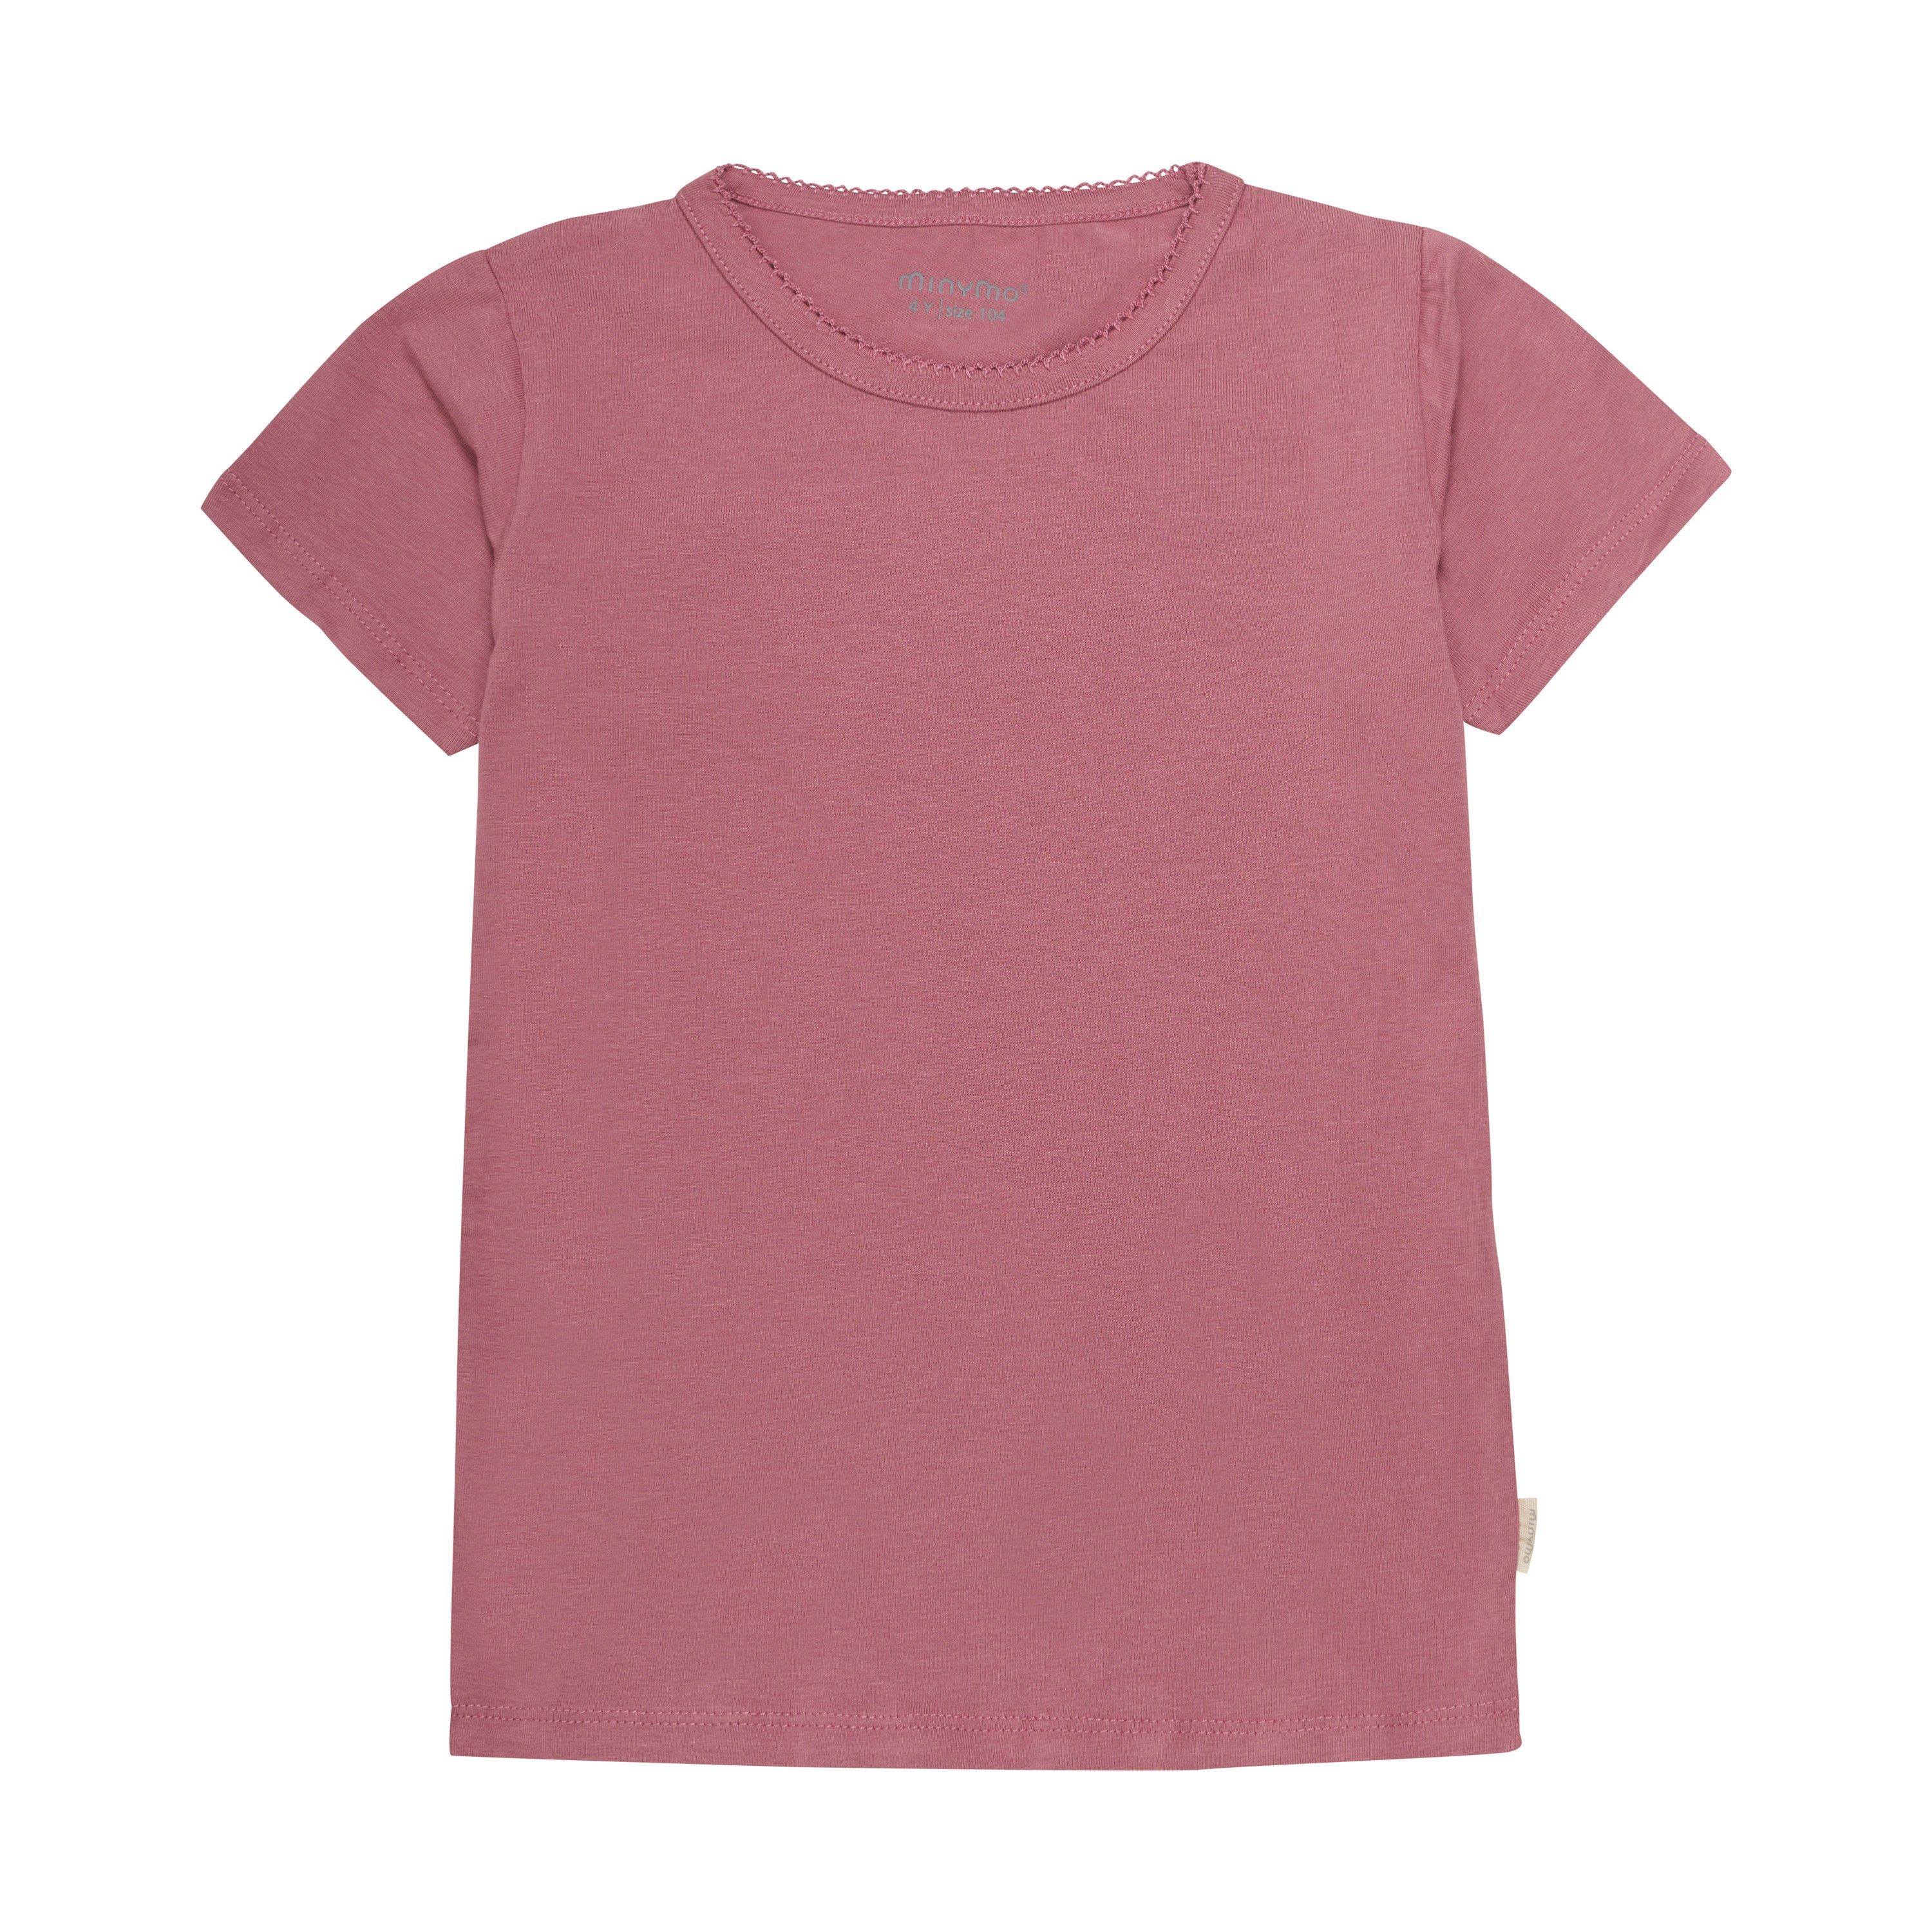 T-Shirt - - (585) 3933 2er-Pack - MINYMO Basic Minymo 33 (2-pack) MIBasic mit und Print T-shirt Kurzarmshirt Mesa Rose